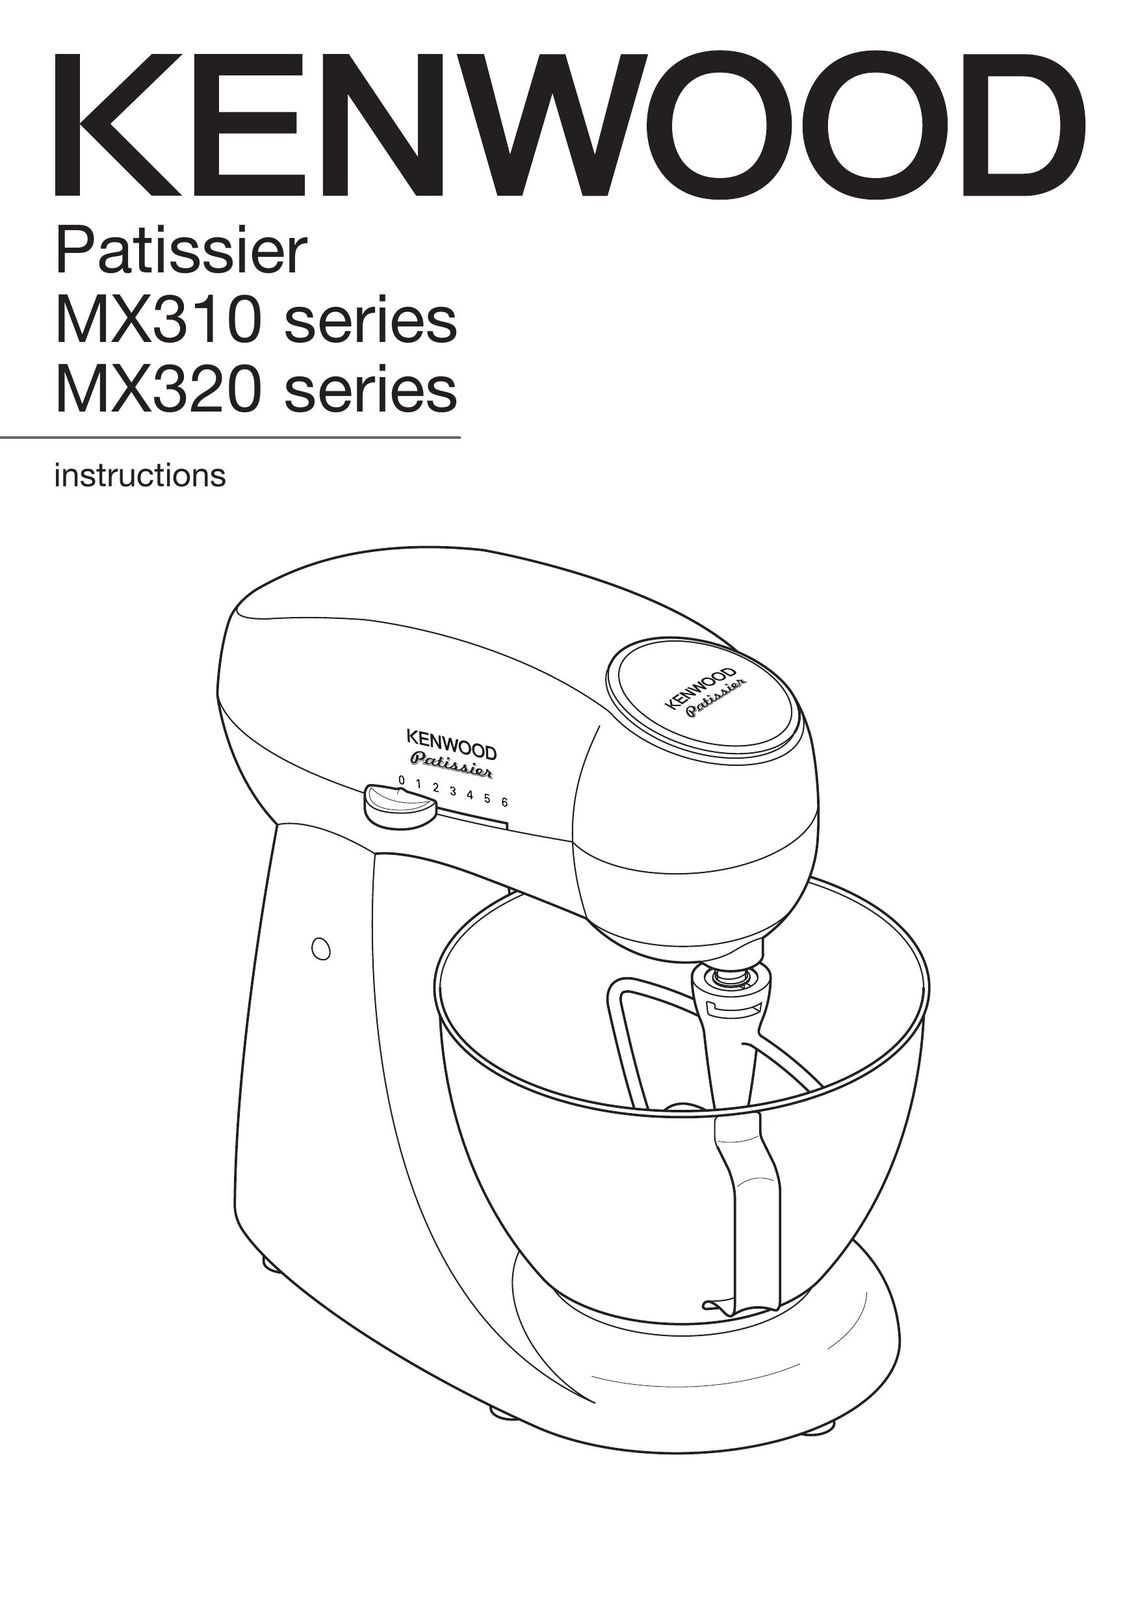 Kenwood MX310 series Mixer User Manual